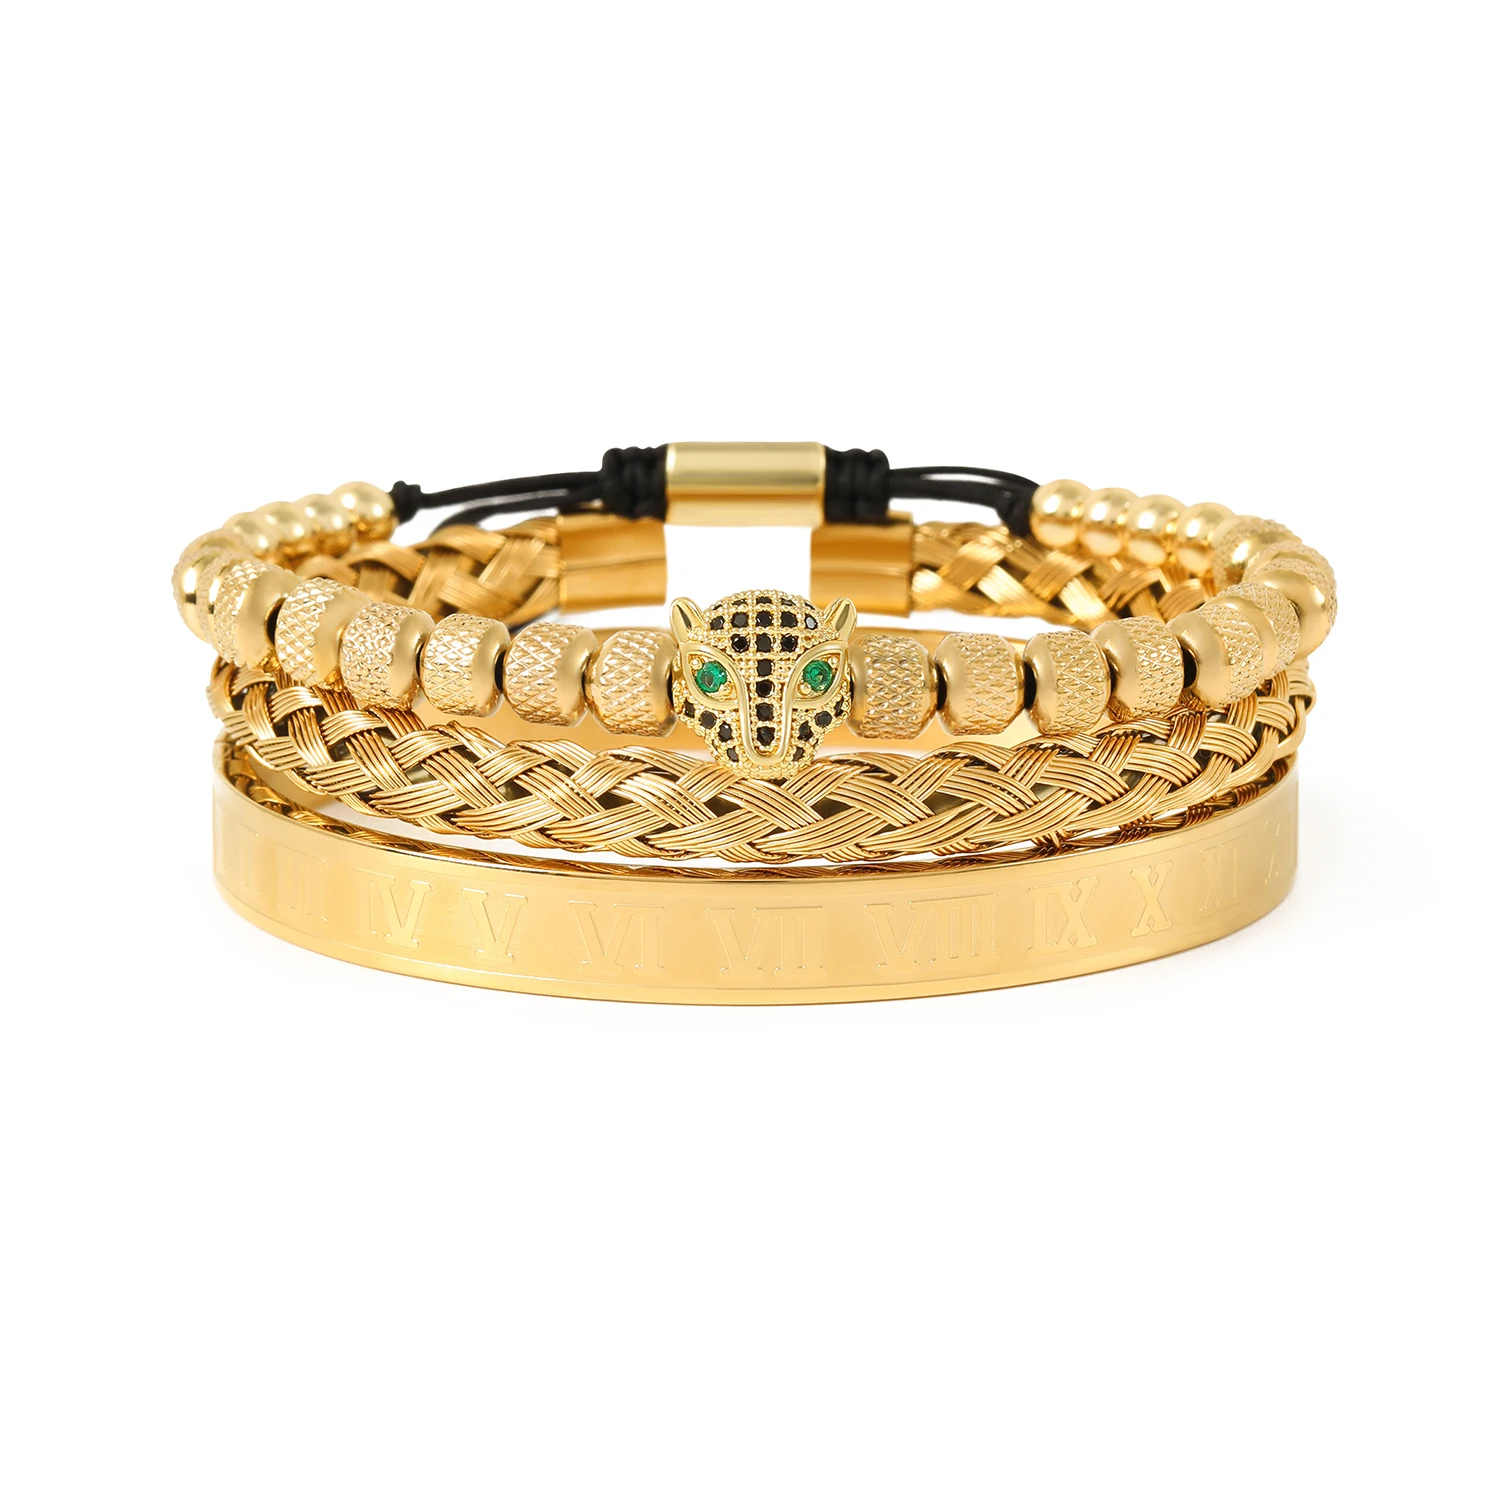 3 styles of luxury gold bracelets -